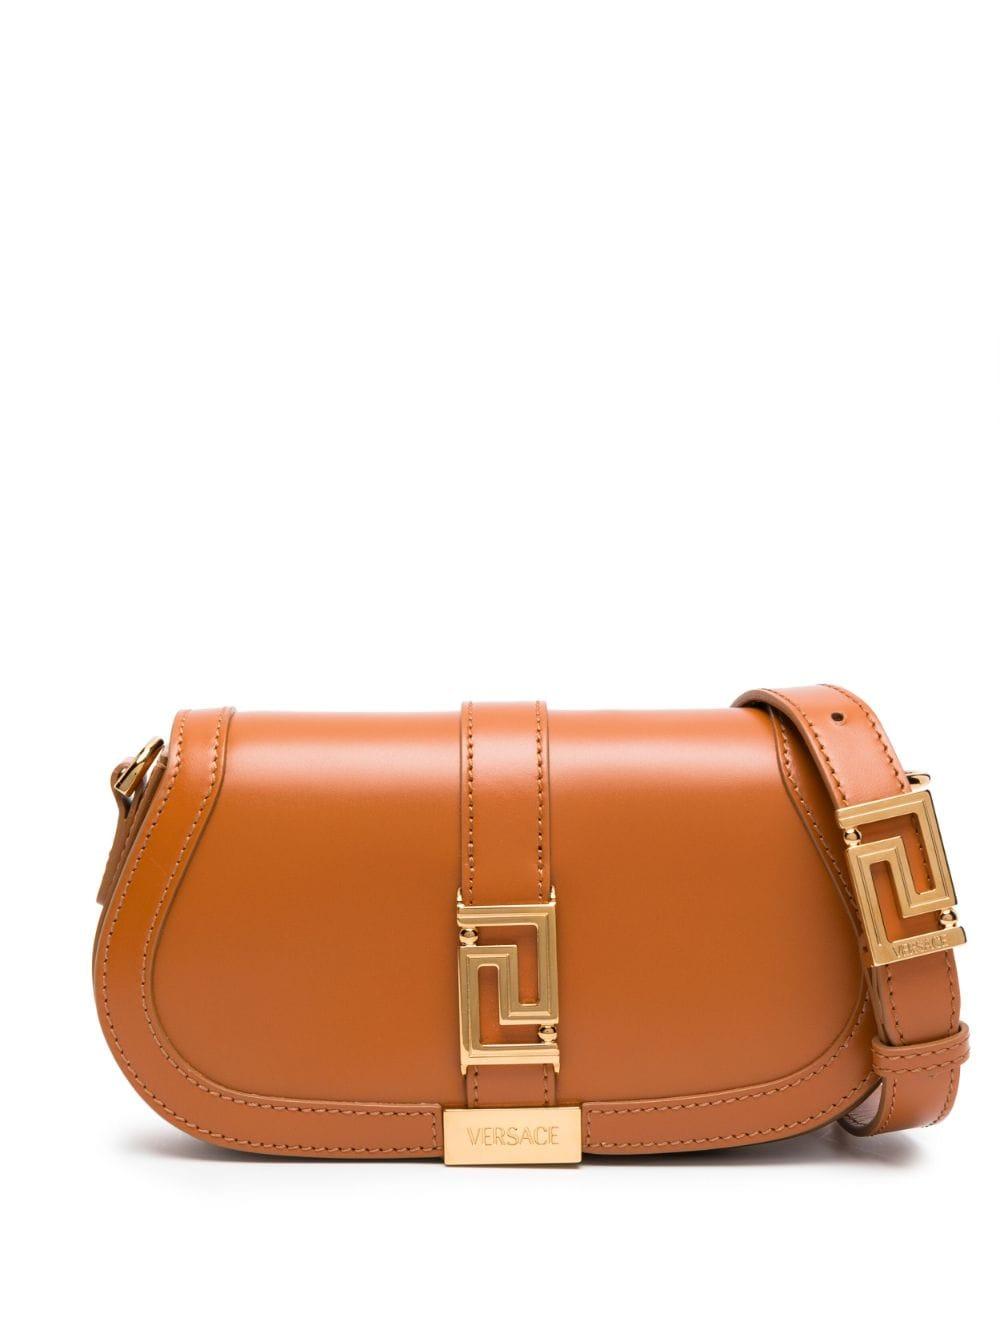 Versace Mini Greca Goddess Leather Shoulder Bag in Orange | Lyst